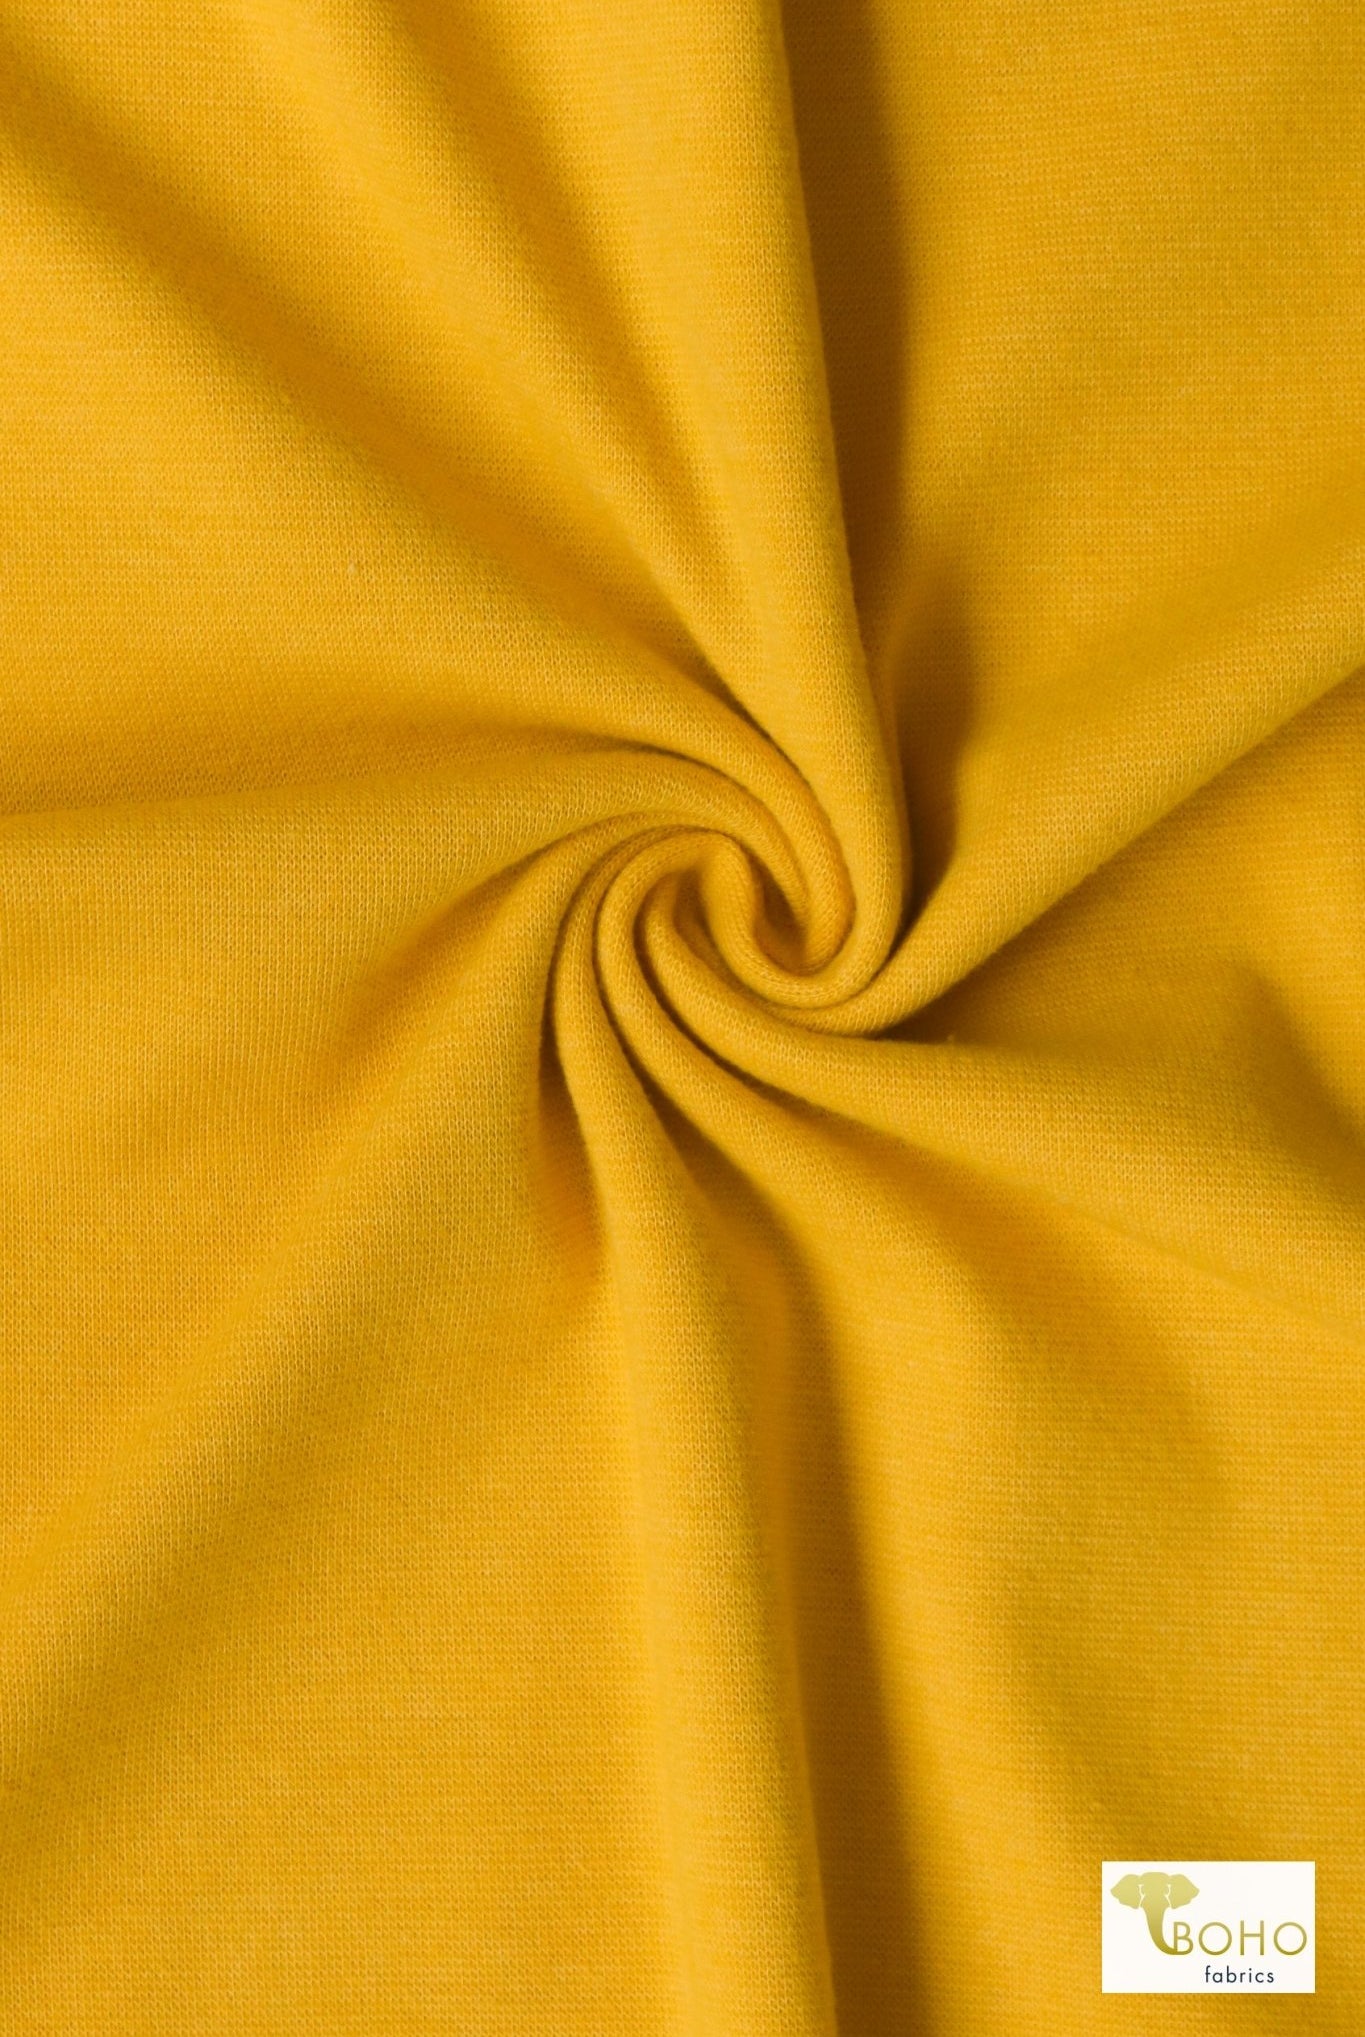 1x1 Rib Knit, Mustard. SOLD BY THE HALF YARD! - Boho Fabrics